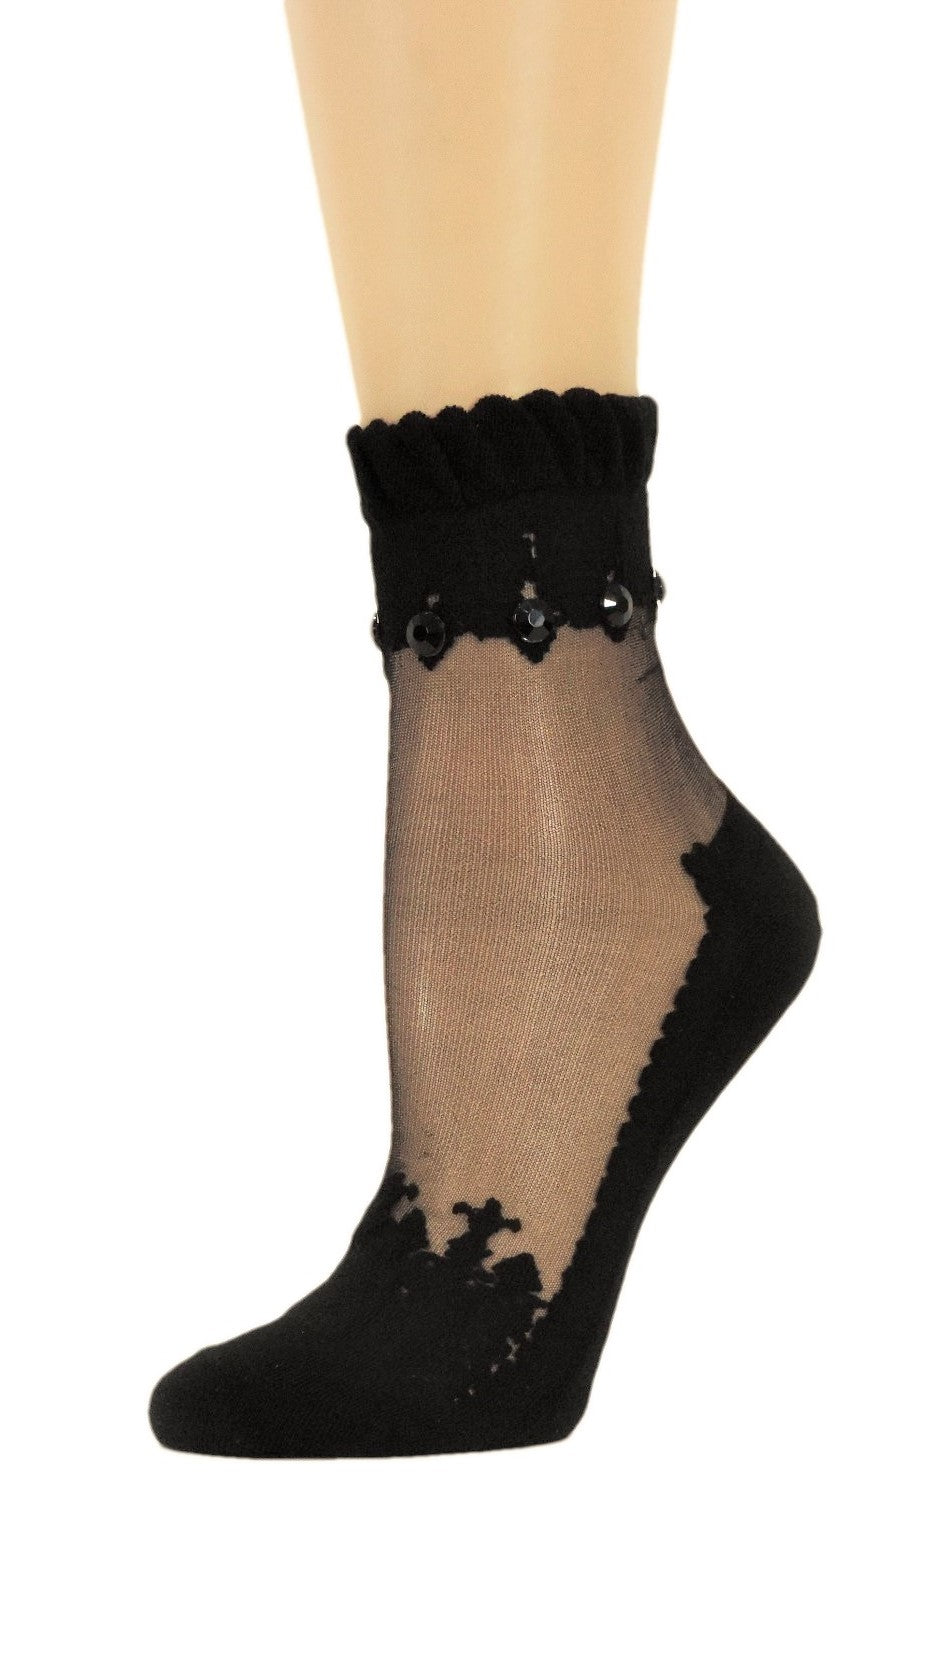 Dashing Black Custom Sheer Socks with beads - Global Trendz Fashion®